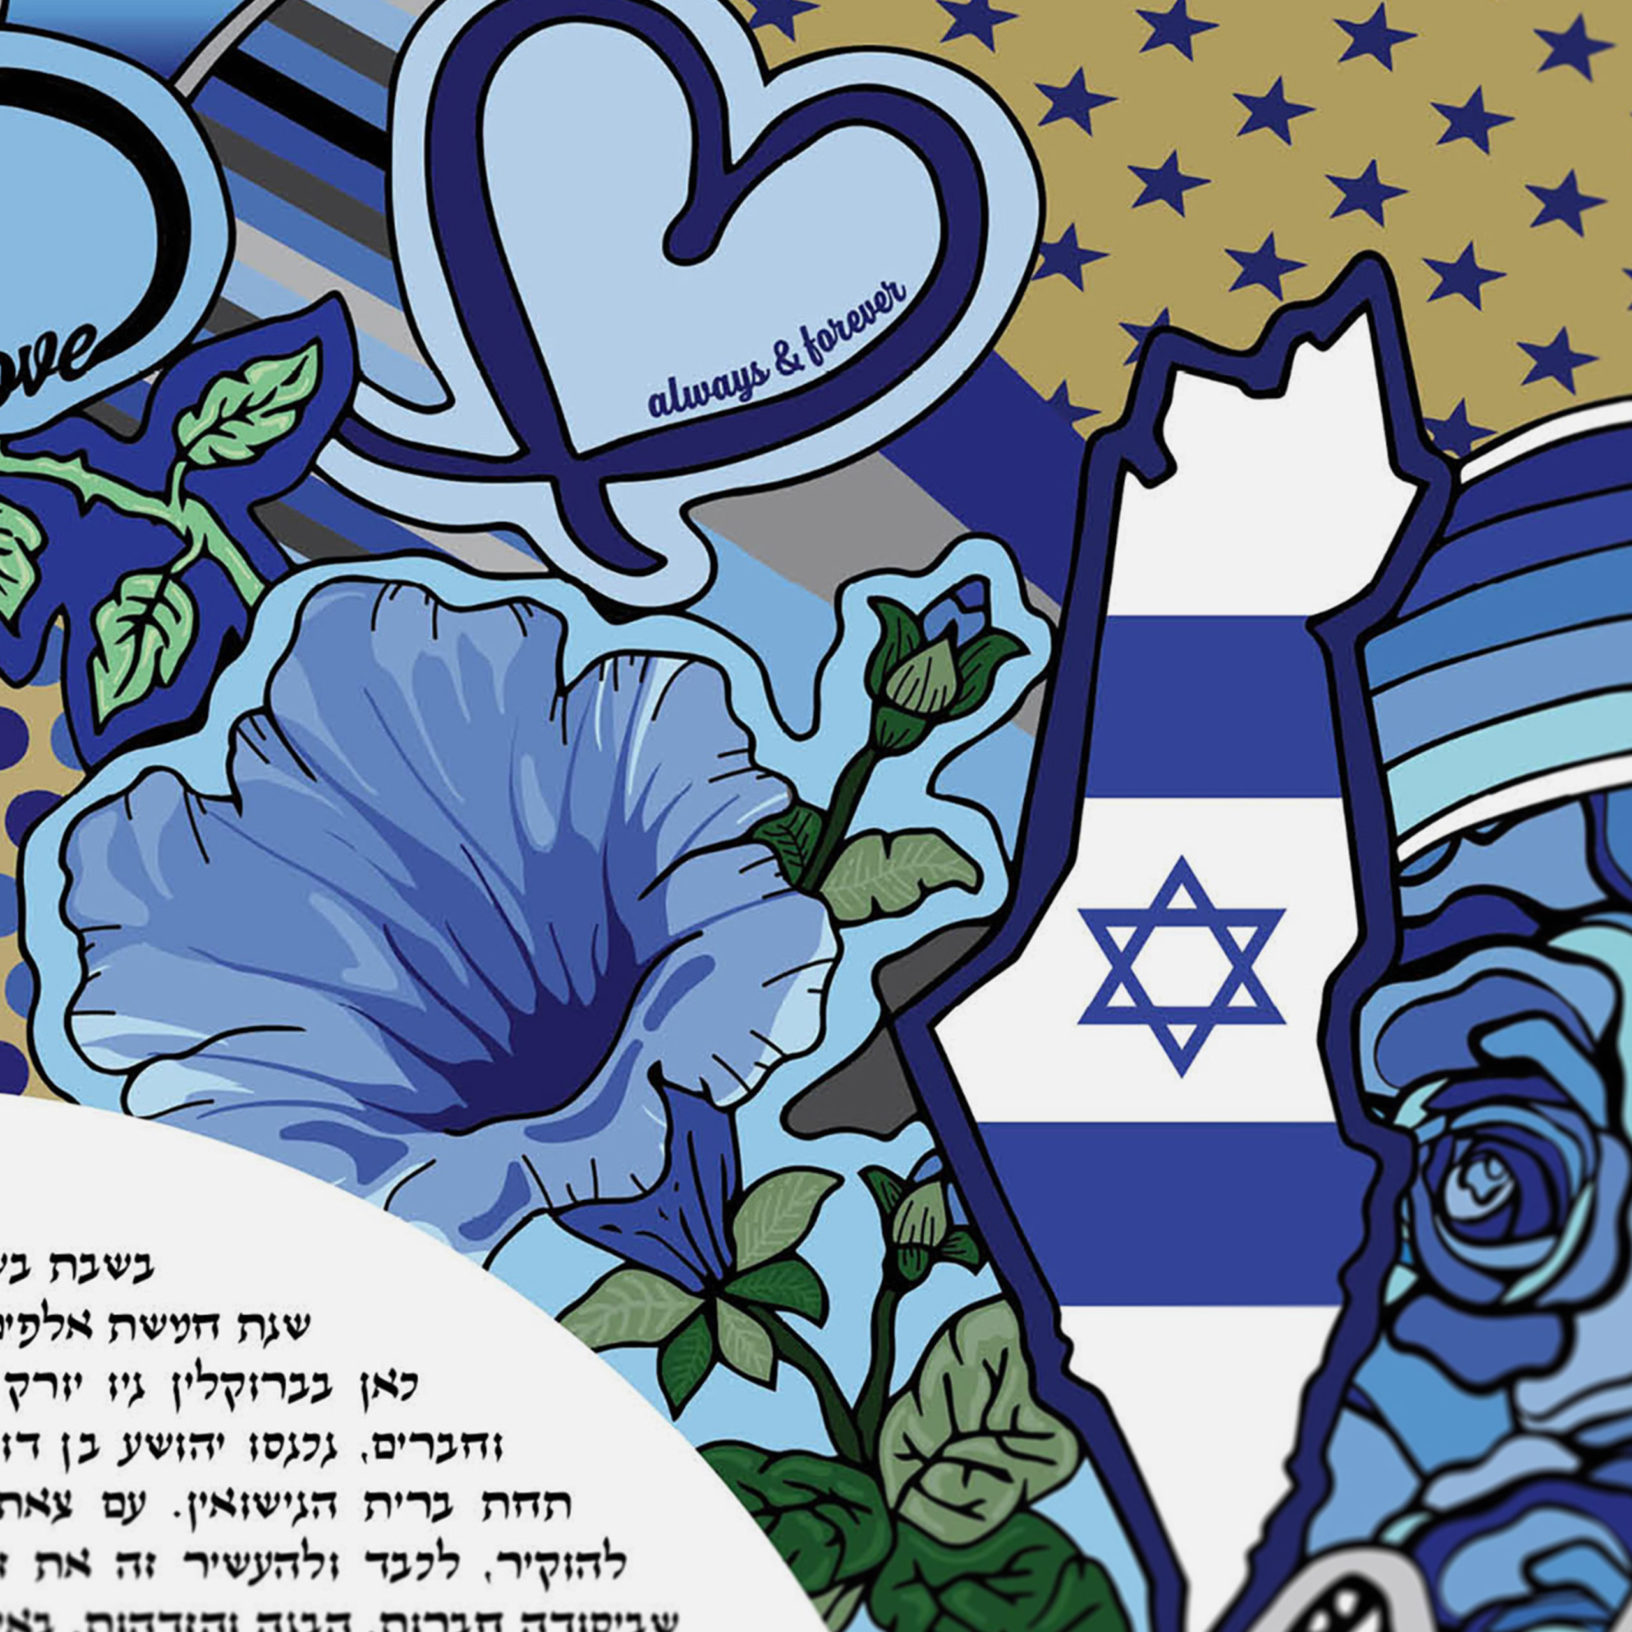 Sammy Handler Giclee Infinity and Beyond Blue Ketubah Jewish Wedding Contract